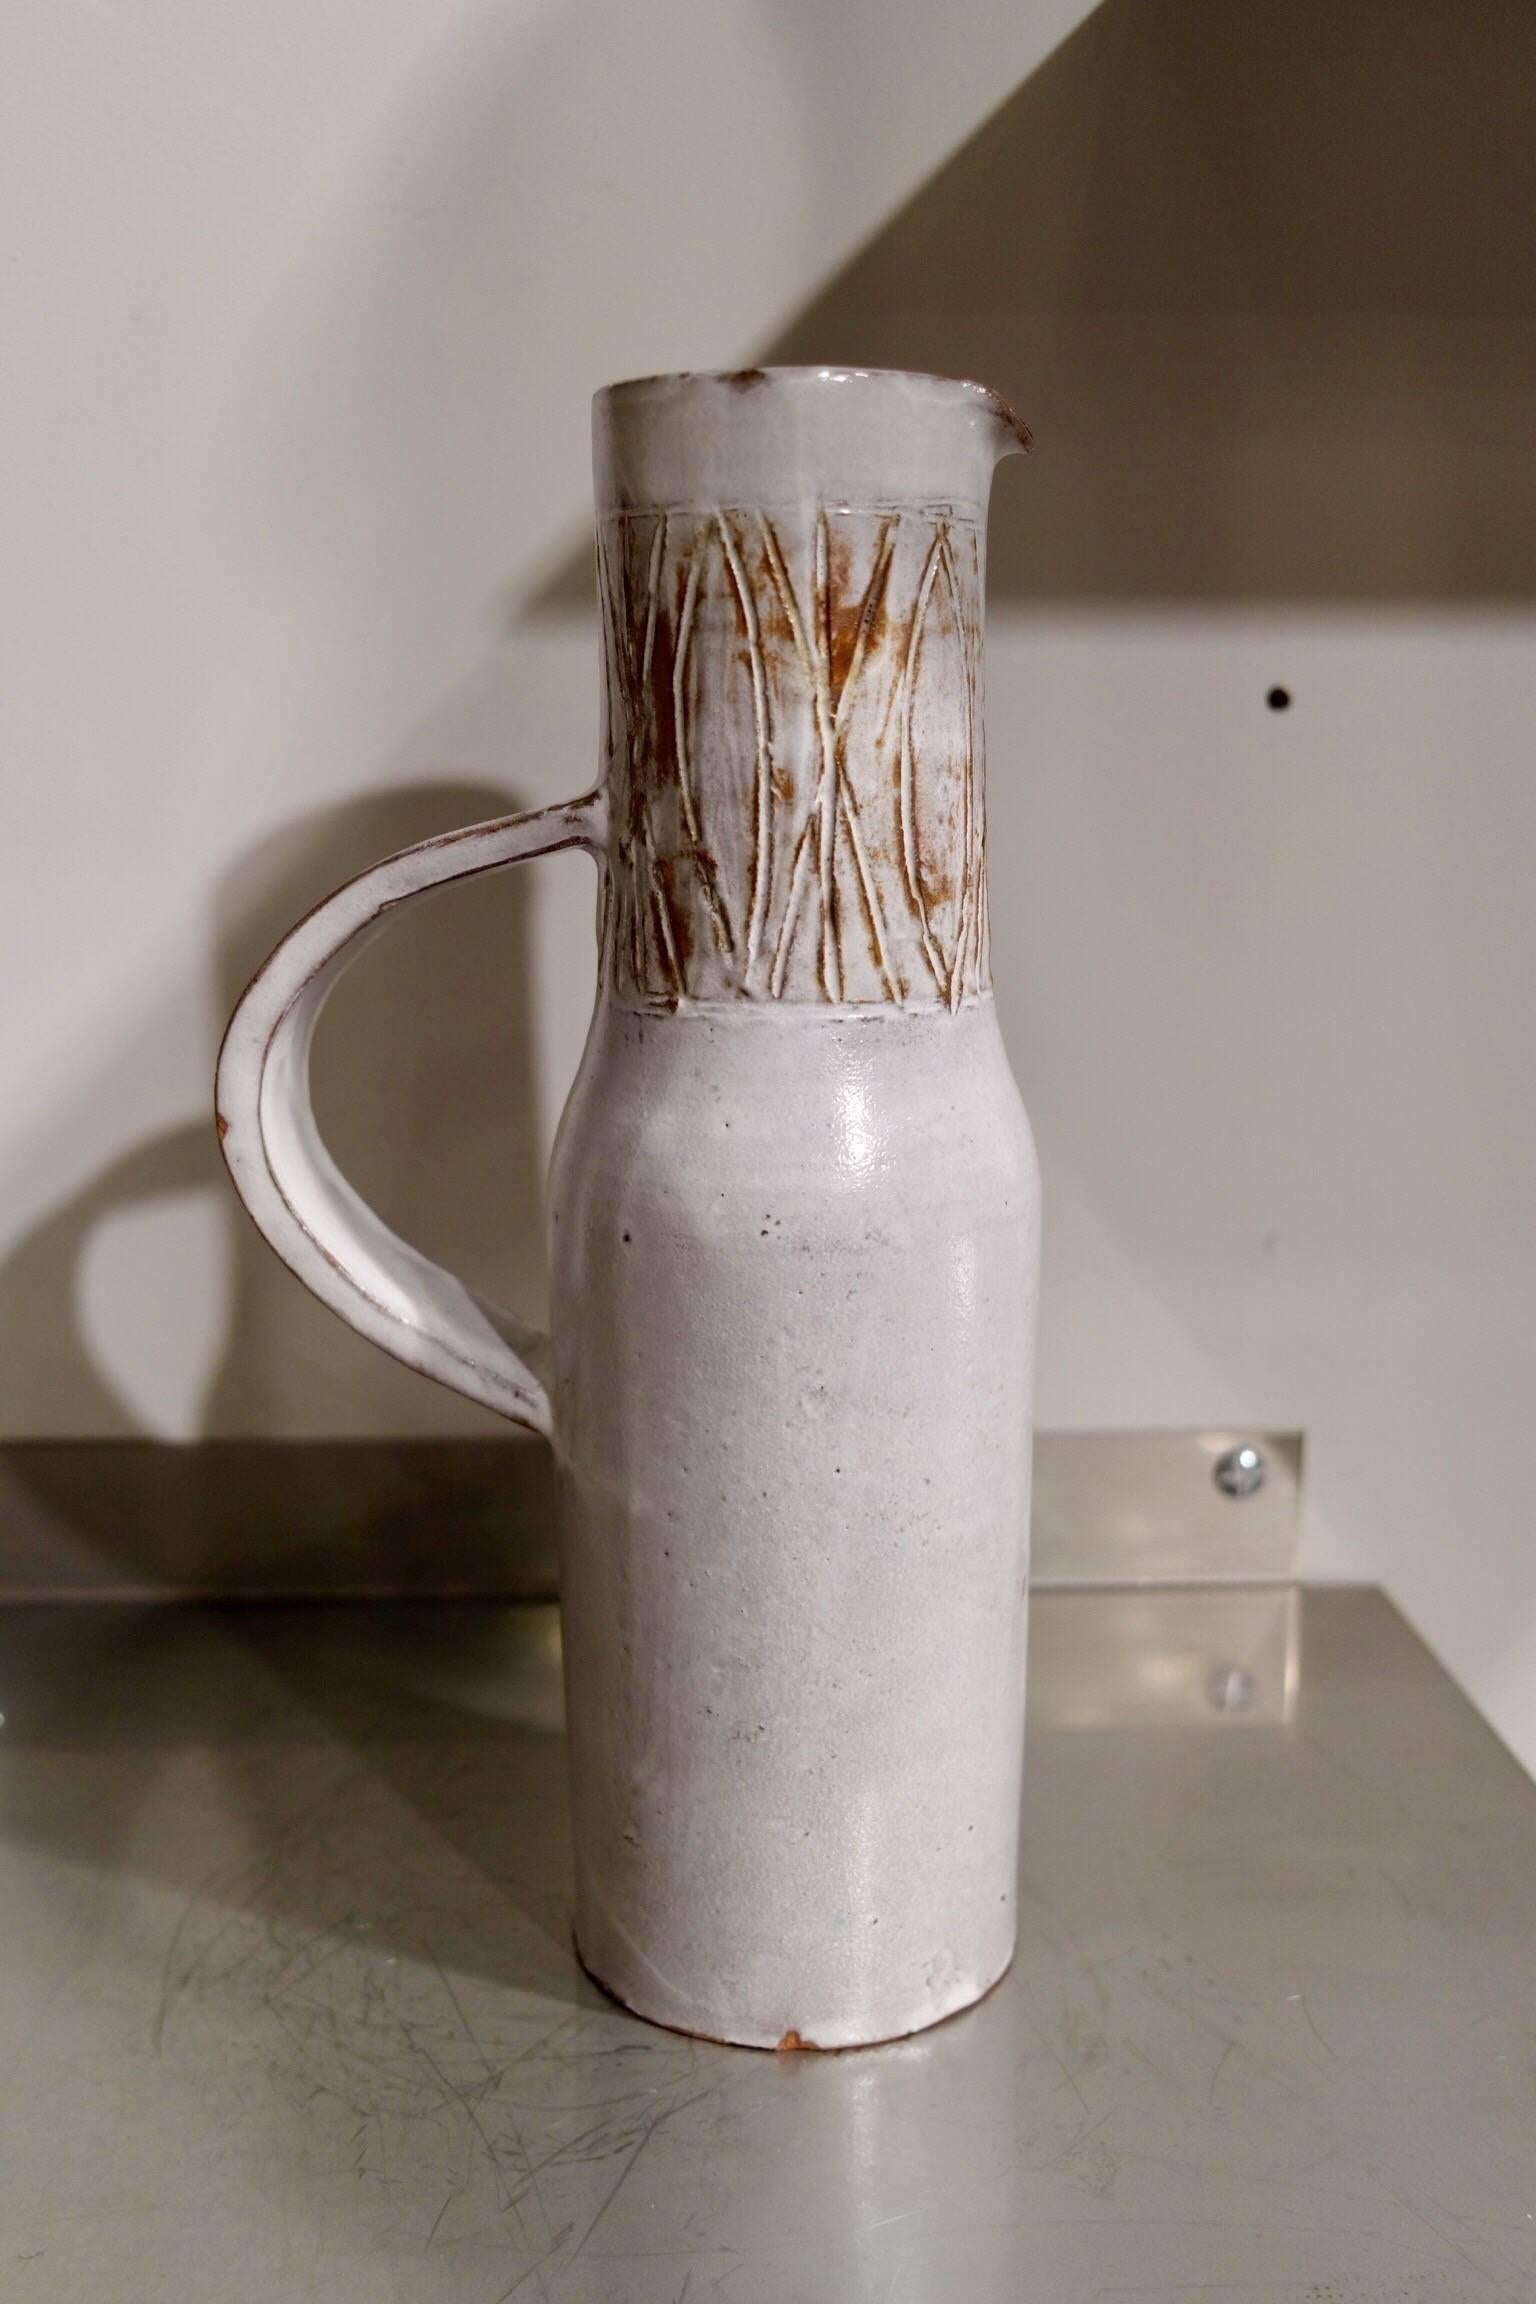 circa 1960.
White and blue enamelled ceramic pitcher by Les Argonautes, France.
(Isabelle Ferlay et Frédérique Bourguet).
Fantastic glaze.

A tiny crack at the base (see photos).
Dimensions: Height 25.5 cm / Diameter (base): 7.5 cm.